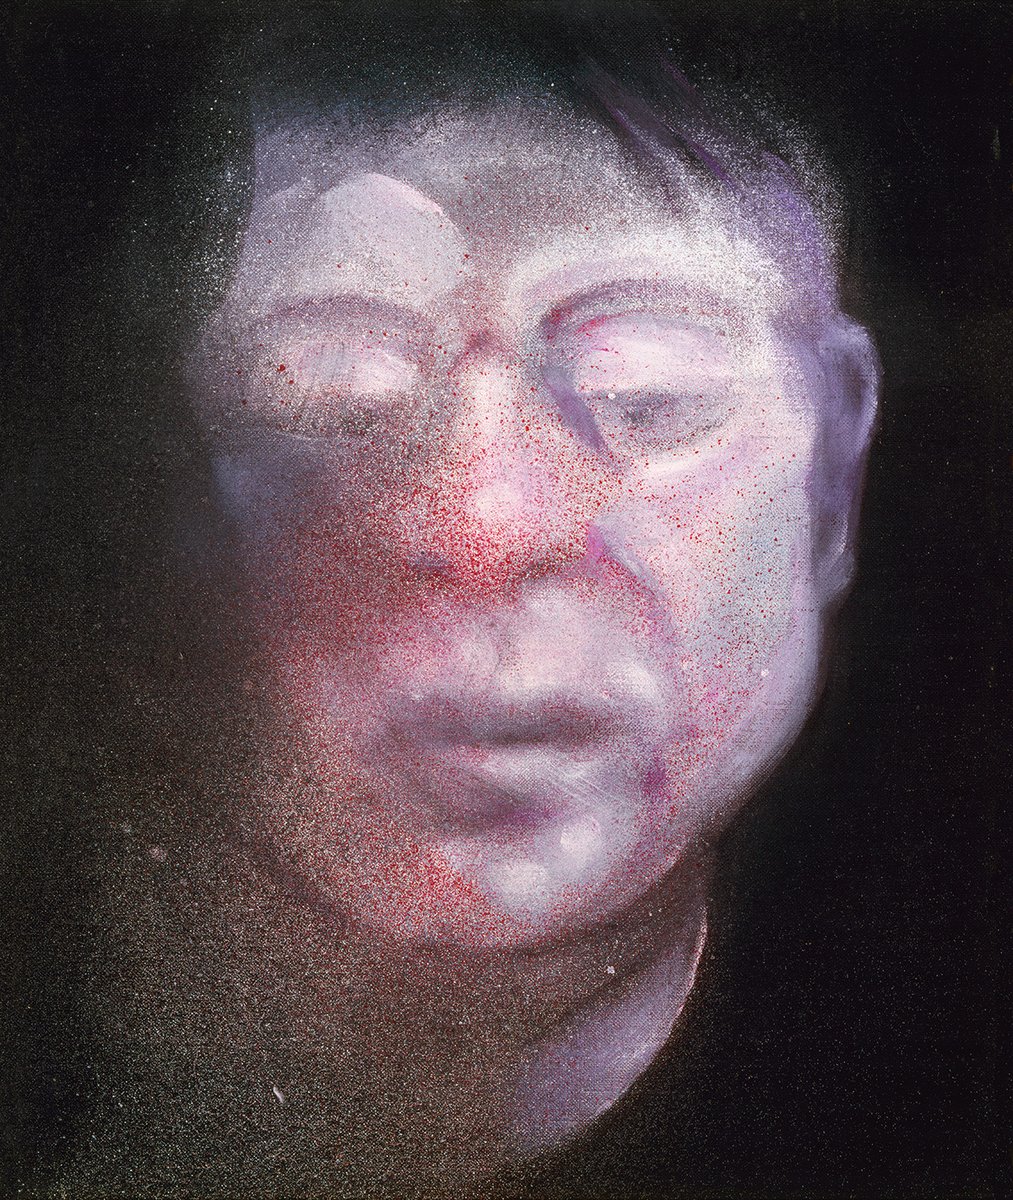 'Self-Portrait', 1987
Oil and aerosol paint on canvas
14 x 12 in. (35.5 x 30.5 cm)

#francisbacon #francisbaconartist #insidefrancisbacon #arthistory #fineart #catalogueraisonee #oiloncanvas